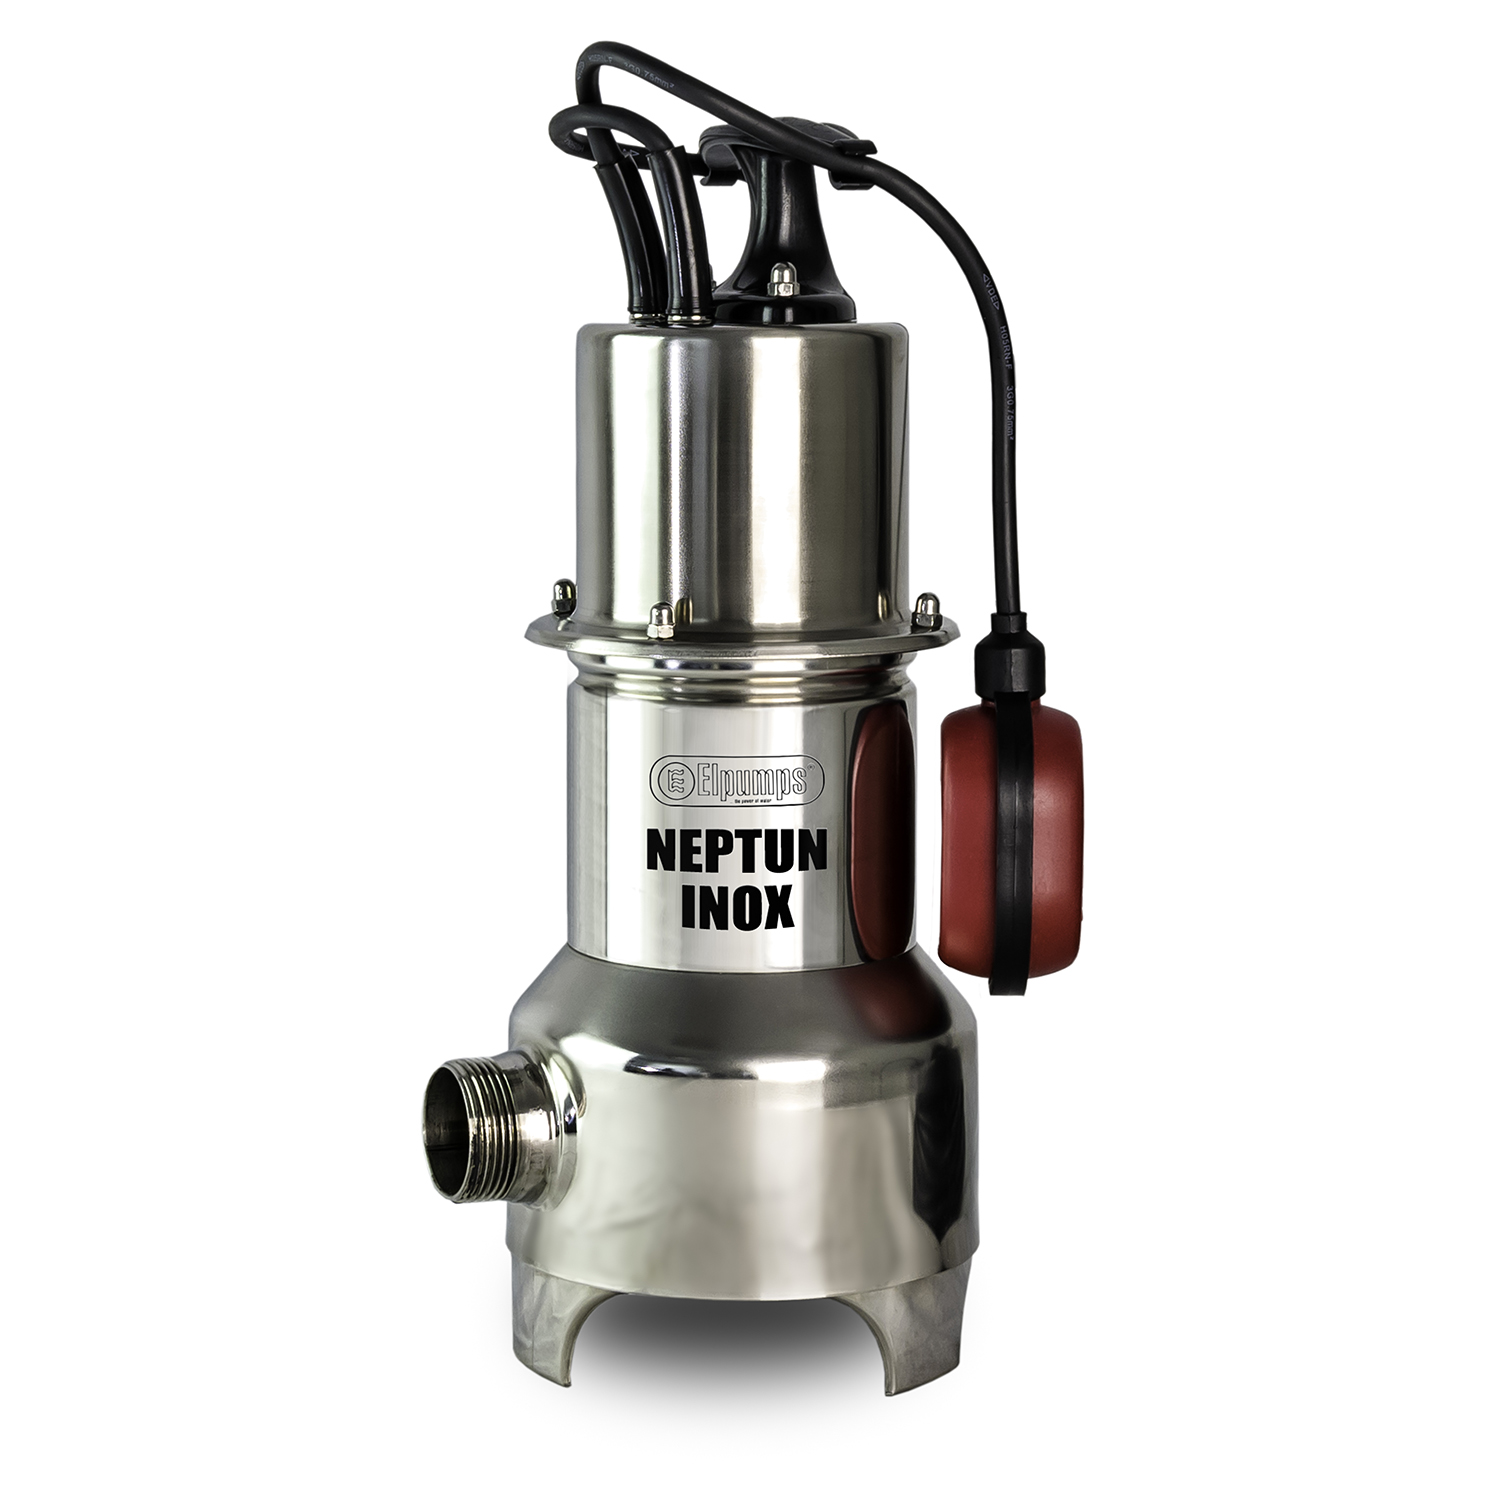 NEPTUN INOX Free-flow (Vortex) submersible pumps for sewage